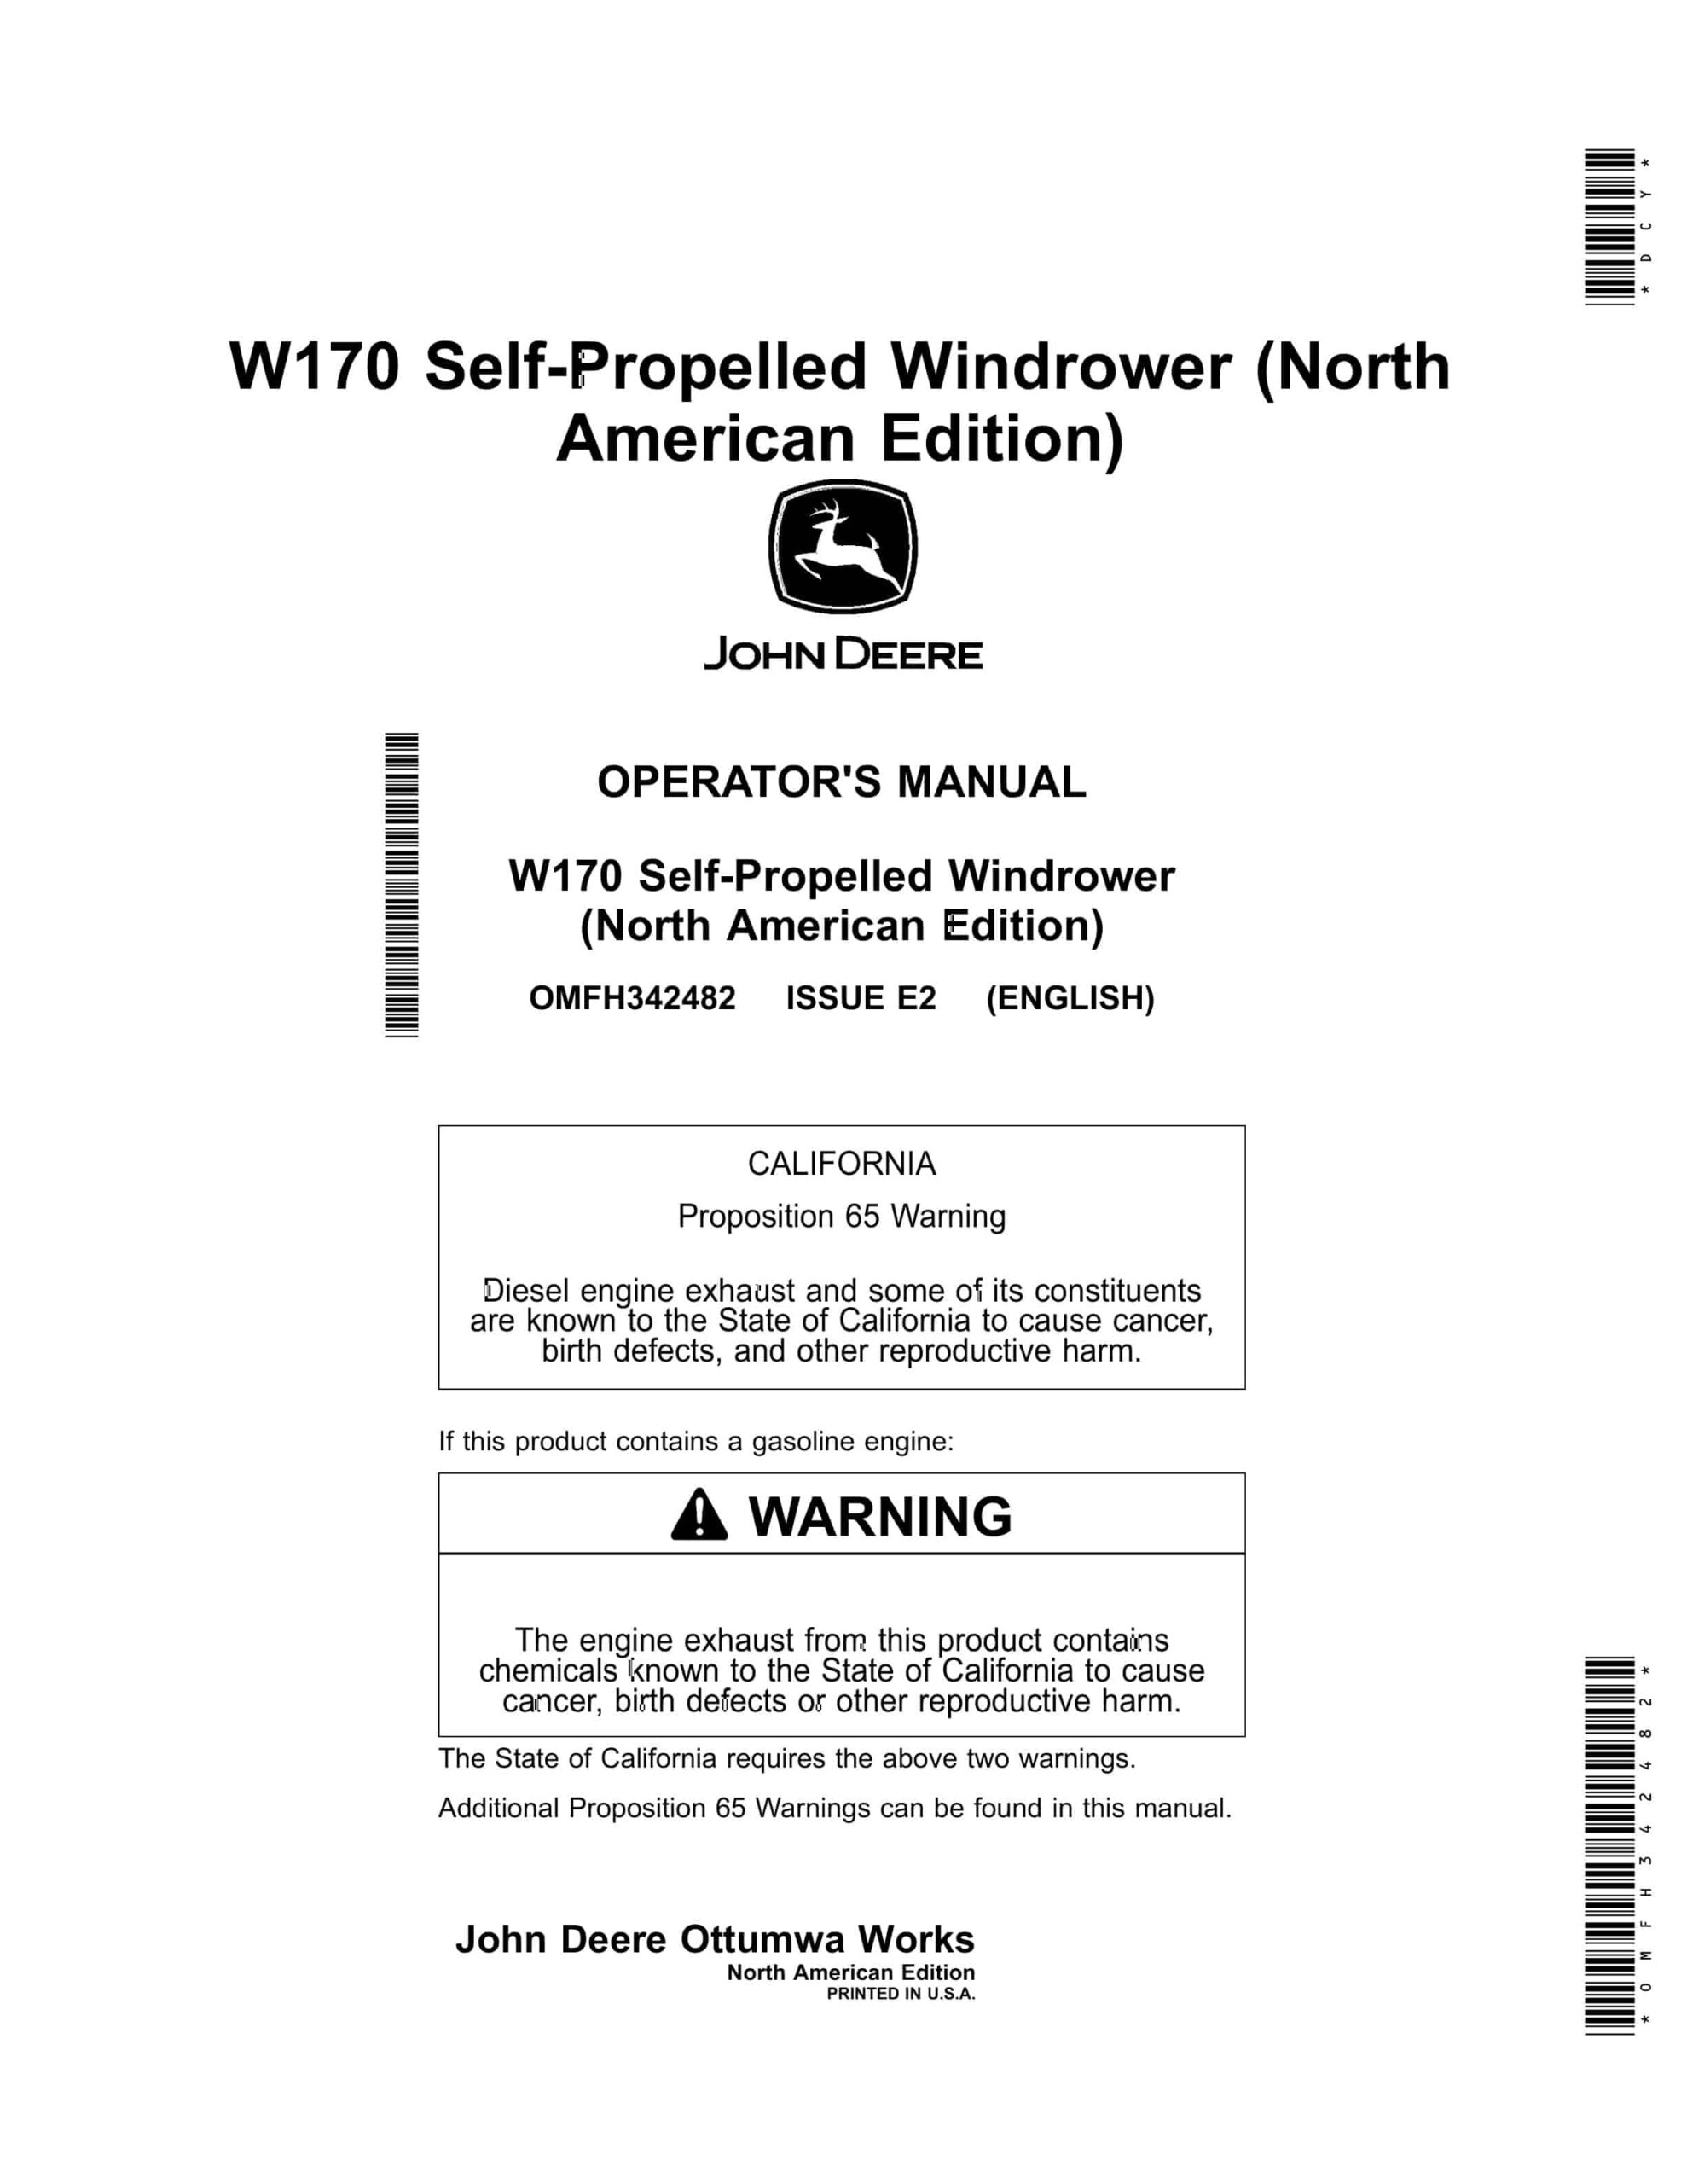 John Deere W170 Self-Propelled Windrower Operator Manual OMFH342482-1